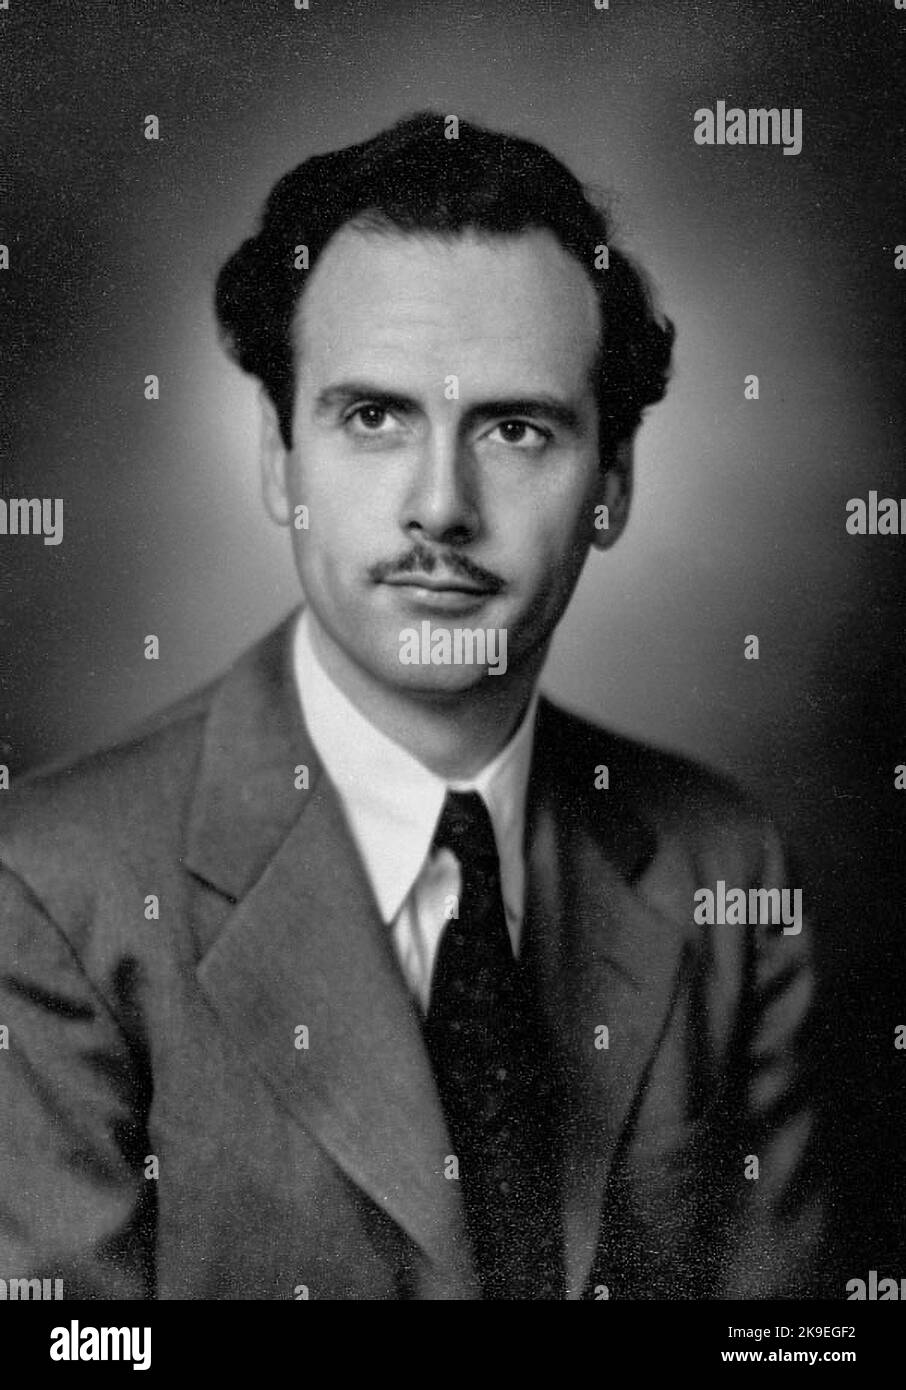 Porträt von Herbert Marshall McLuhan (1911-1980), kanadischer Philosoph. Datum 1945. Stockfoto